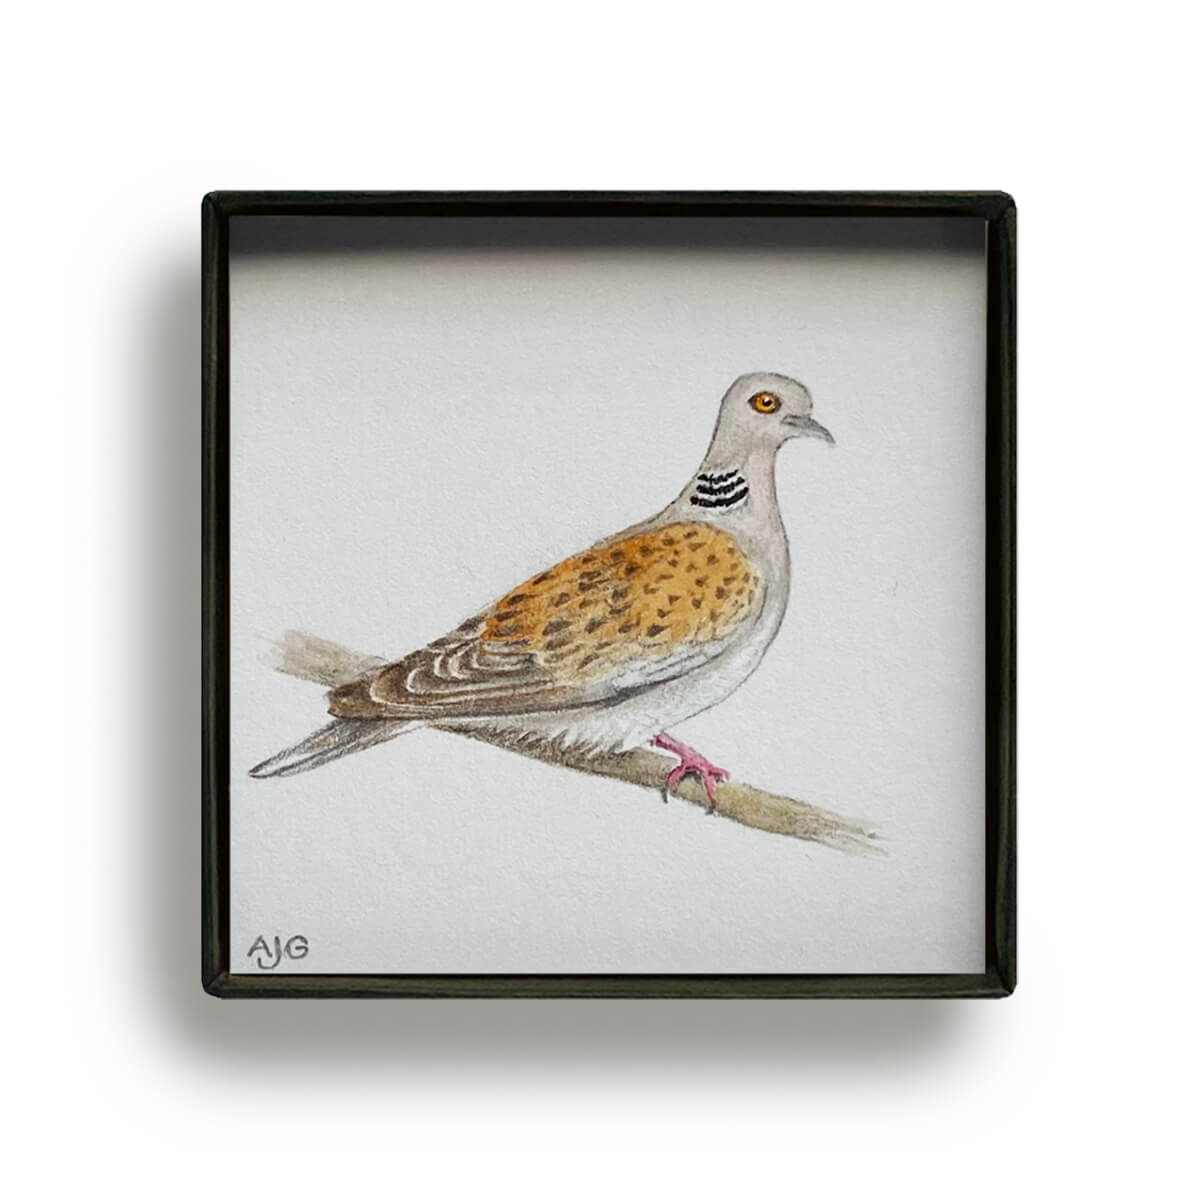 Turtle Dove Picture Box miniature bird painting by Amanda Gosse